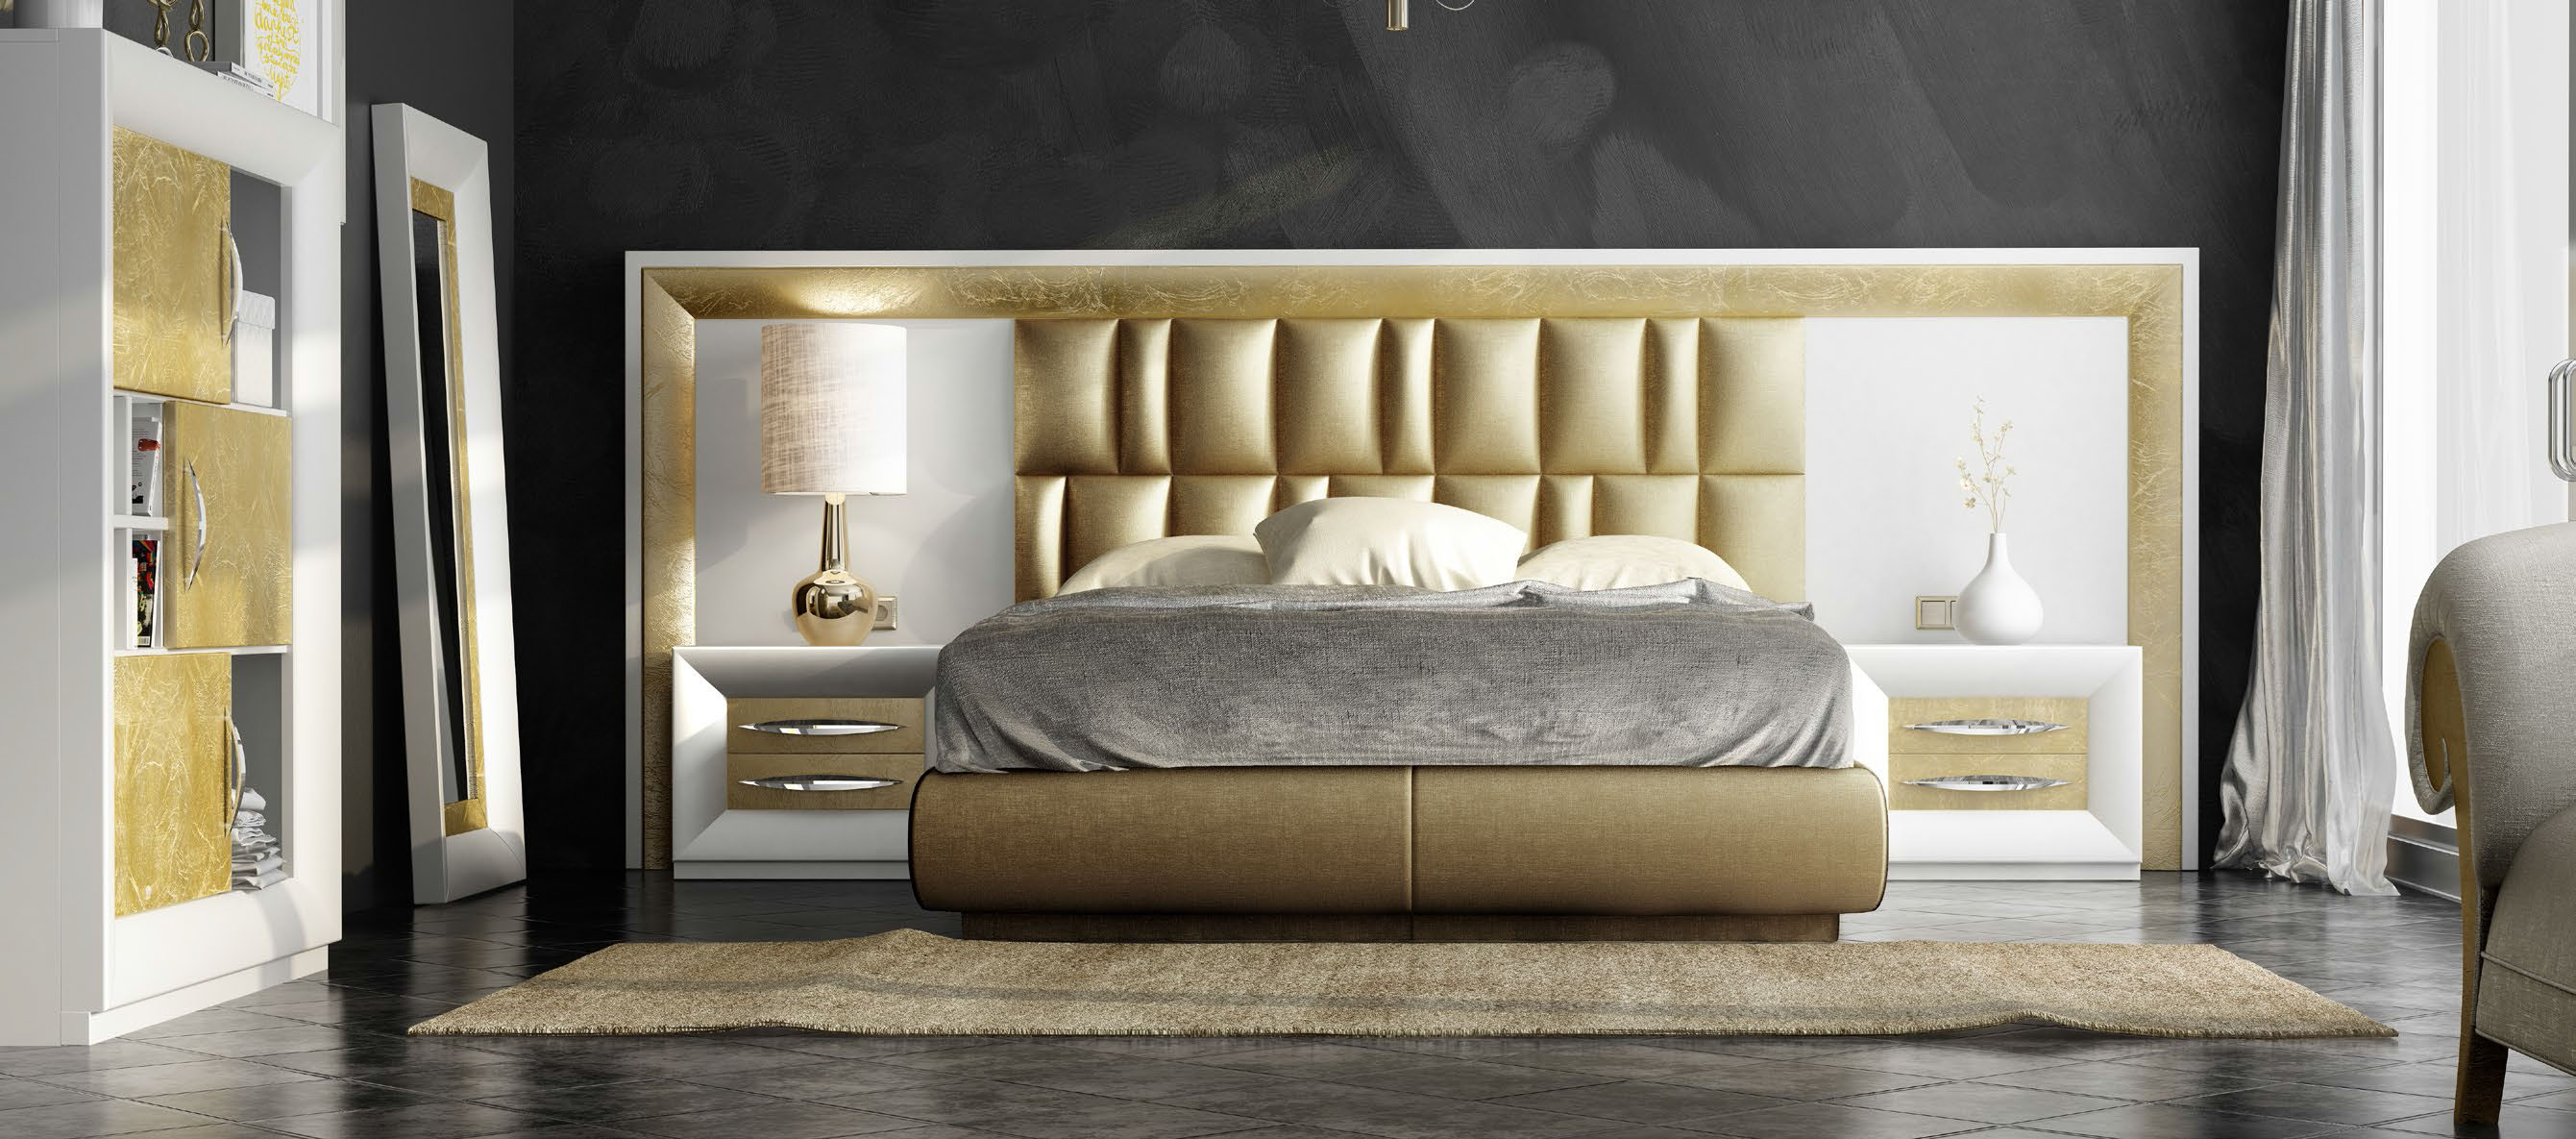 Brands Franco Furniture Bedrooms vol3, Spain DOR 136